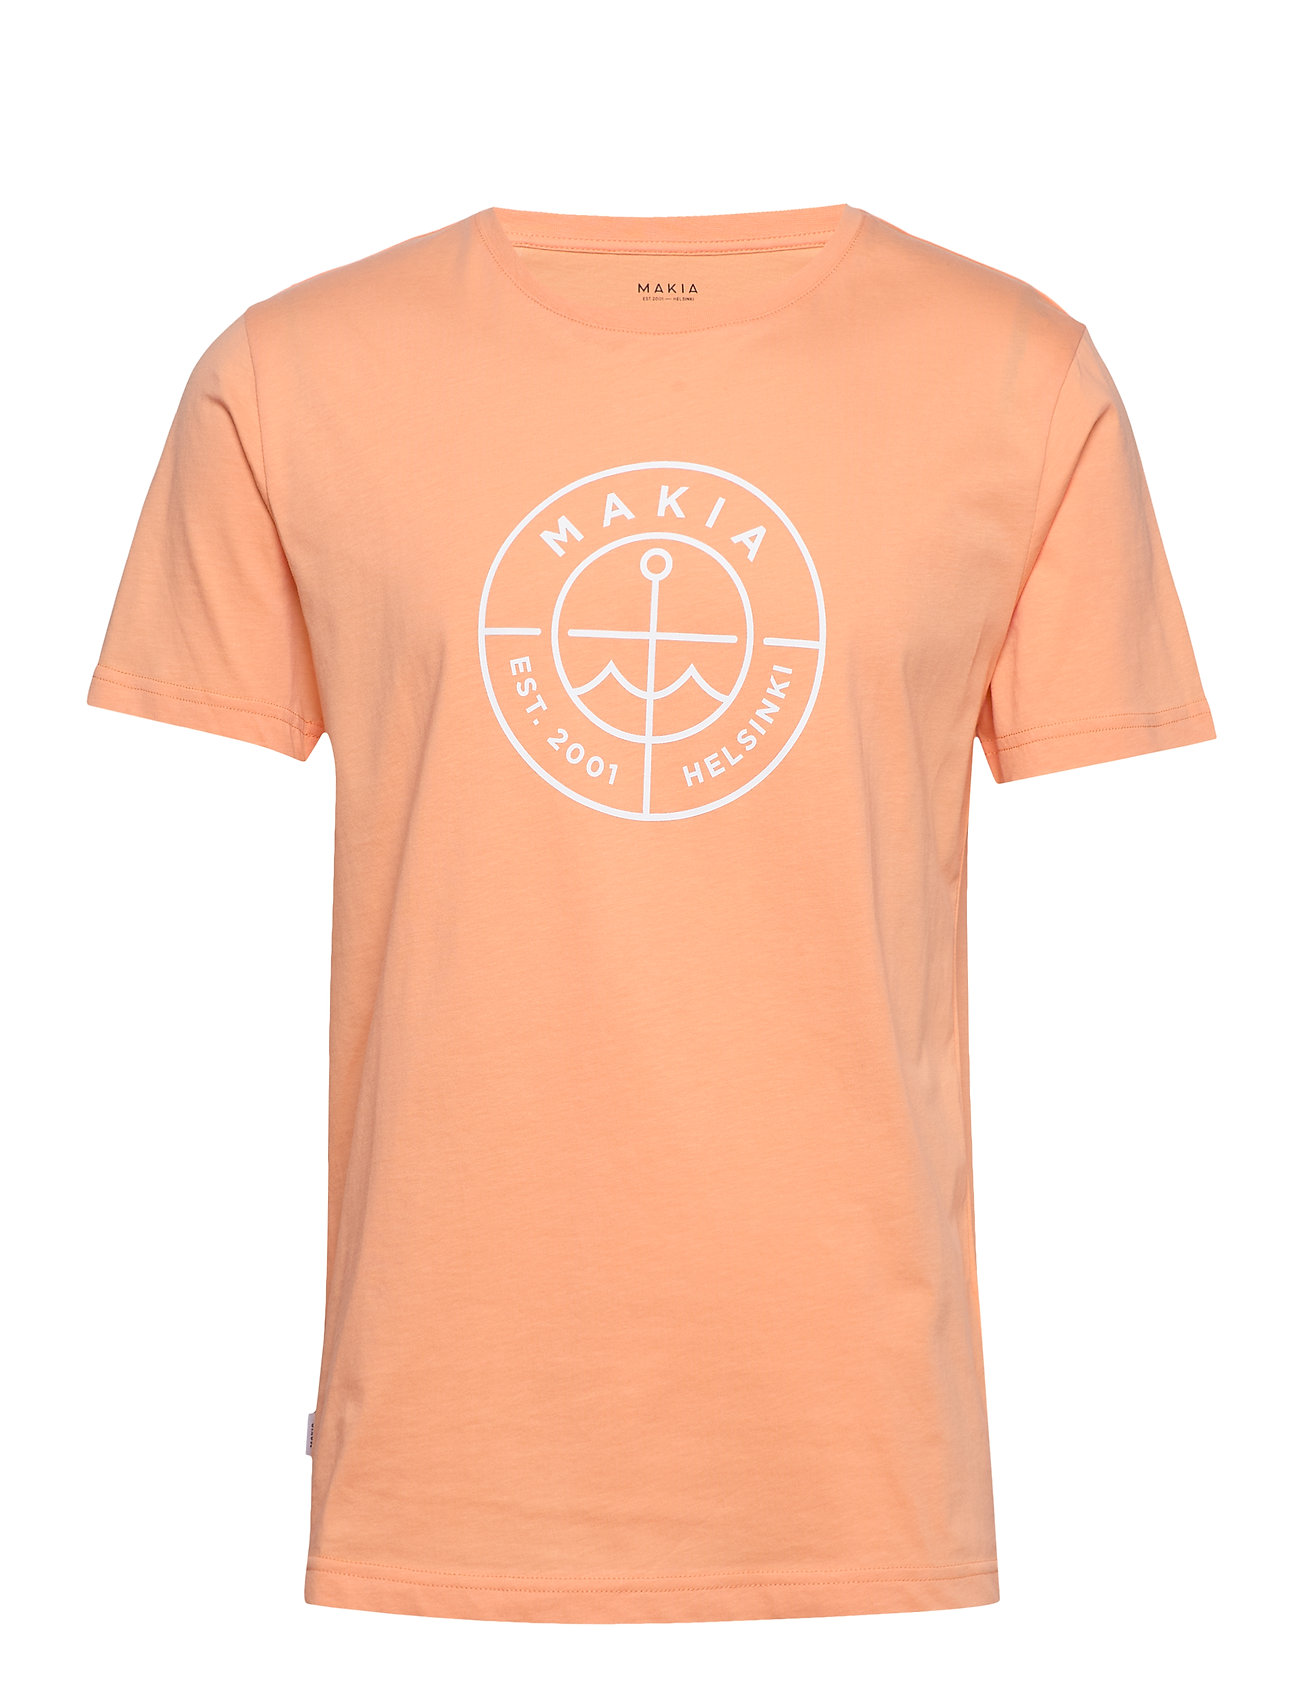 Scope T-Shirt T-shirts Short-sleeved Oranssi Makia